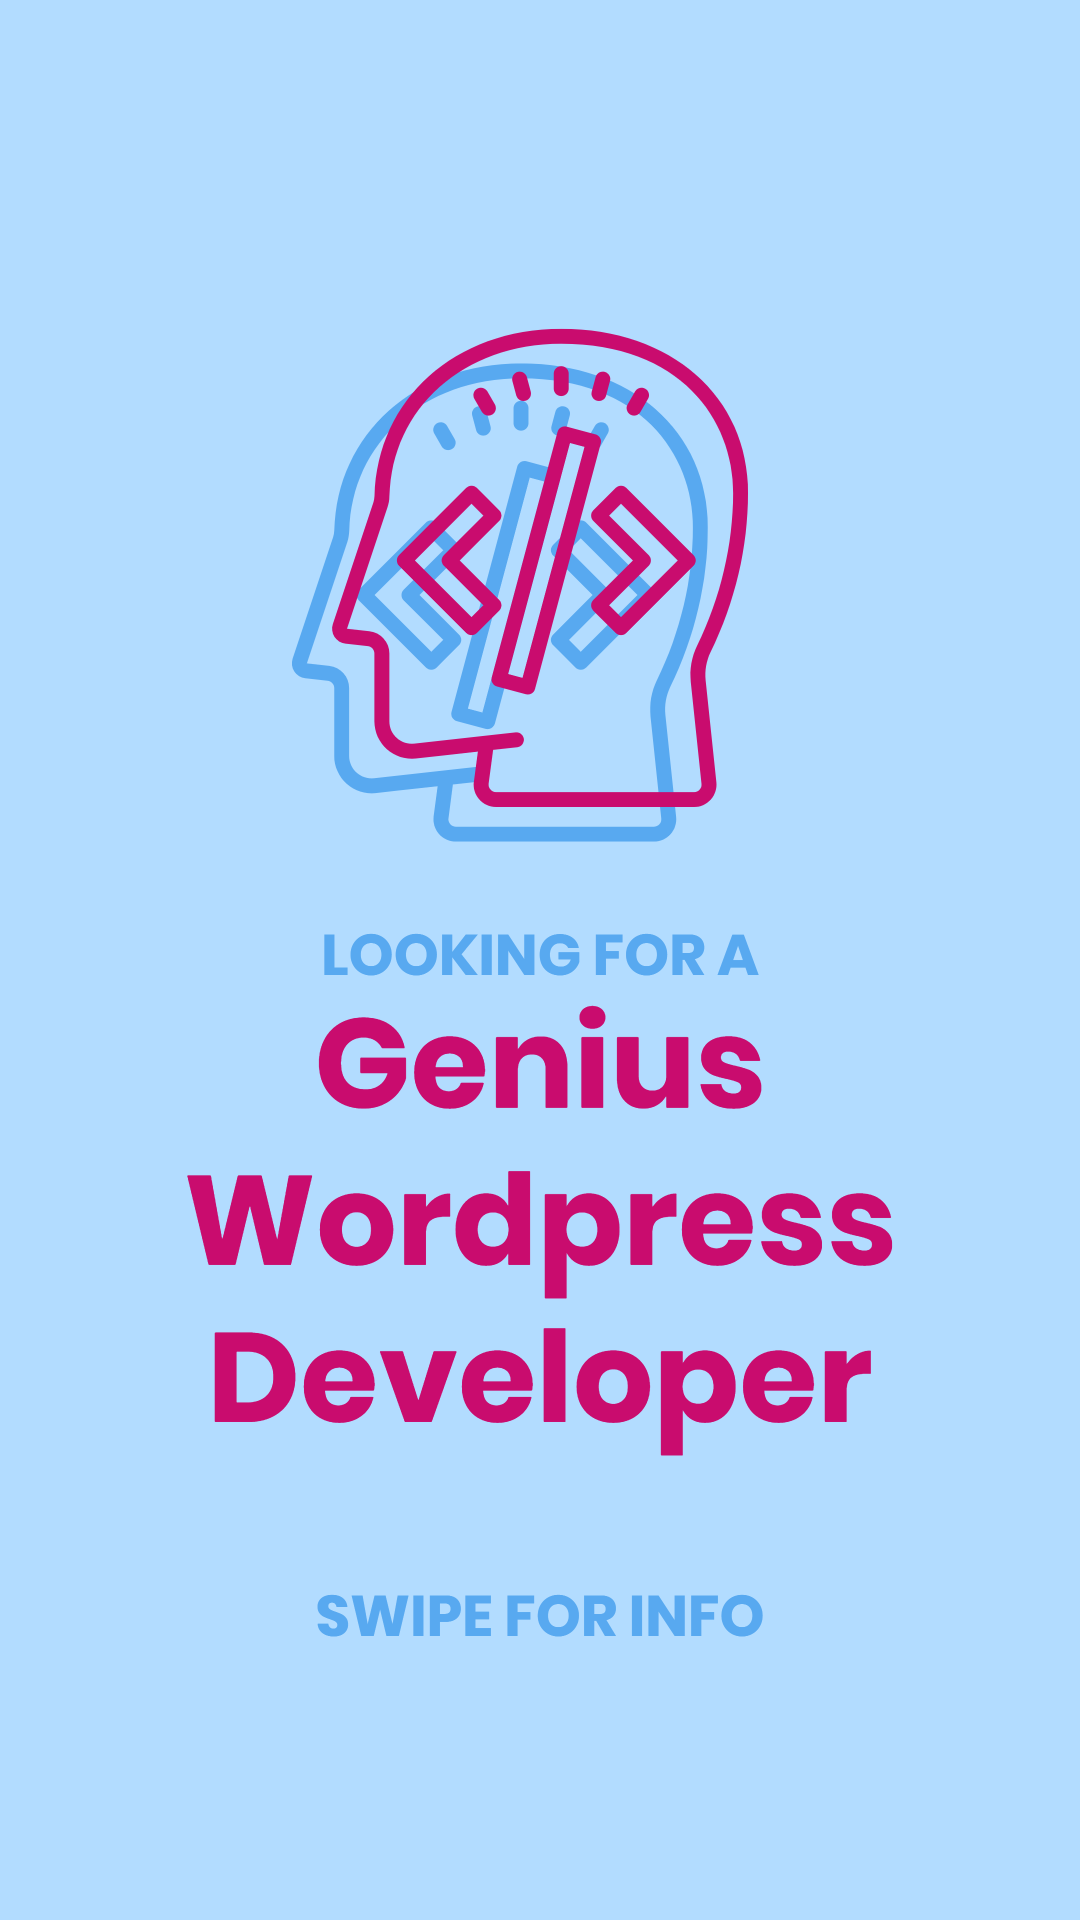 Looking for a Genius Wordpress Developer